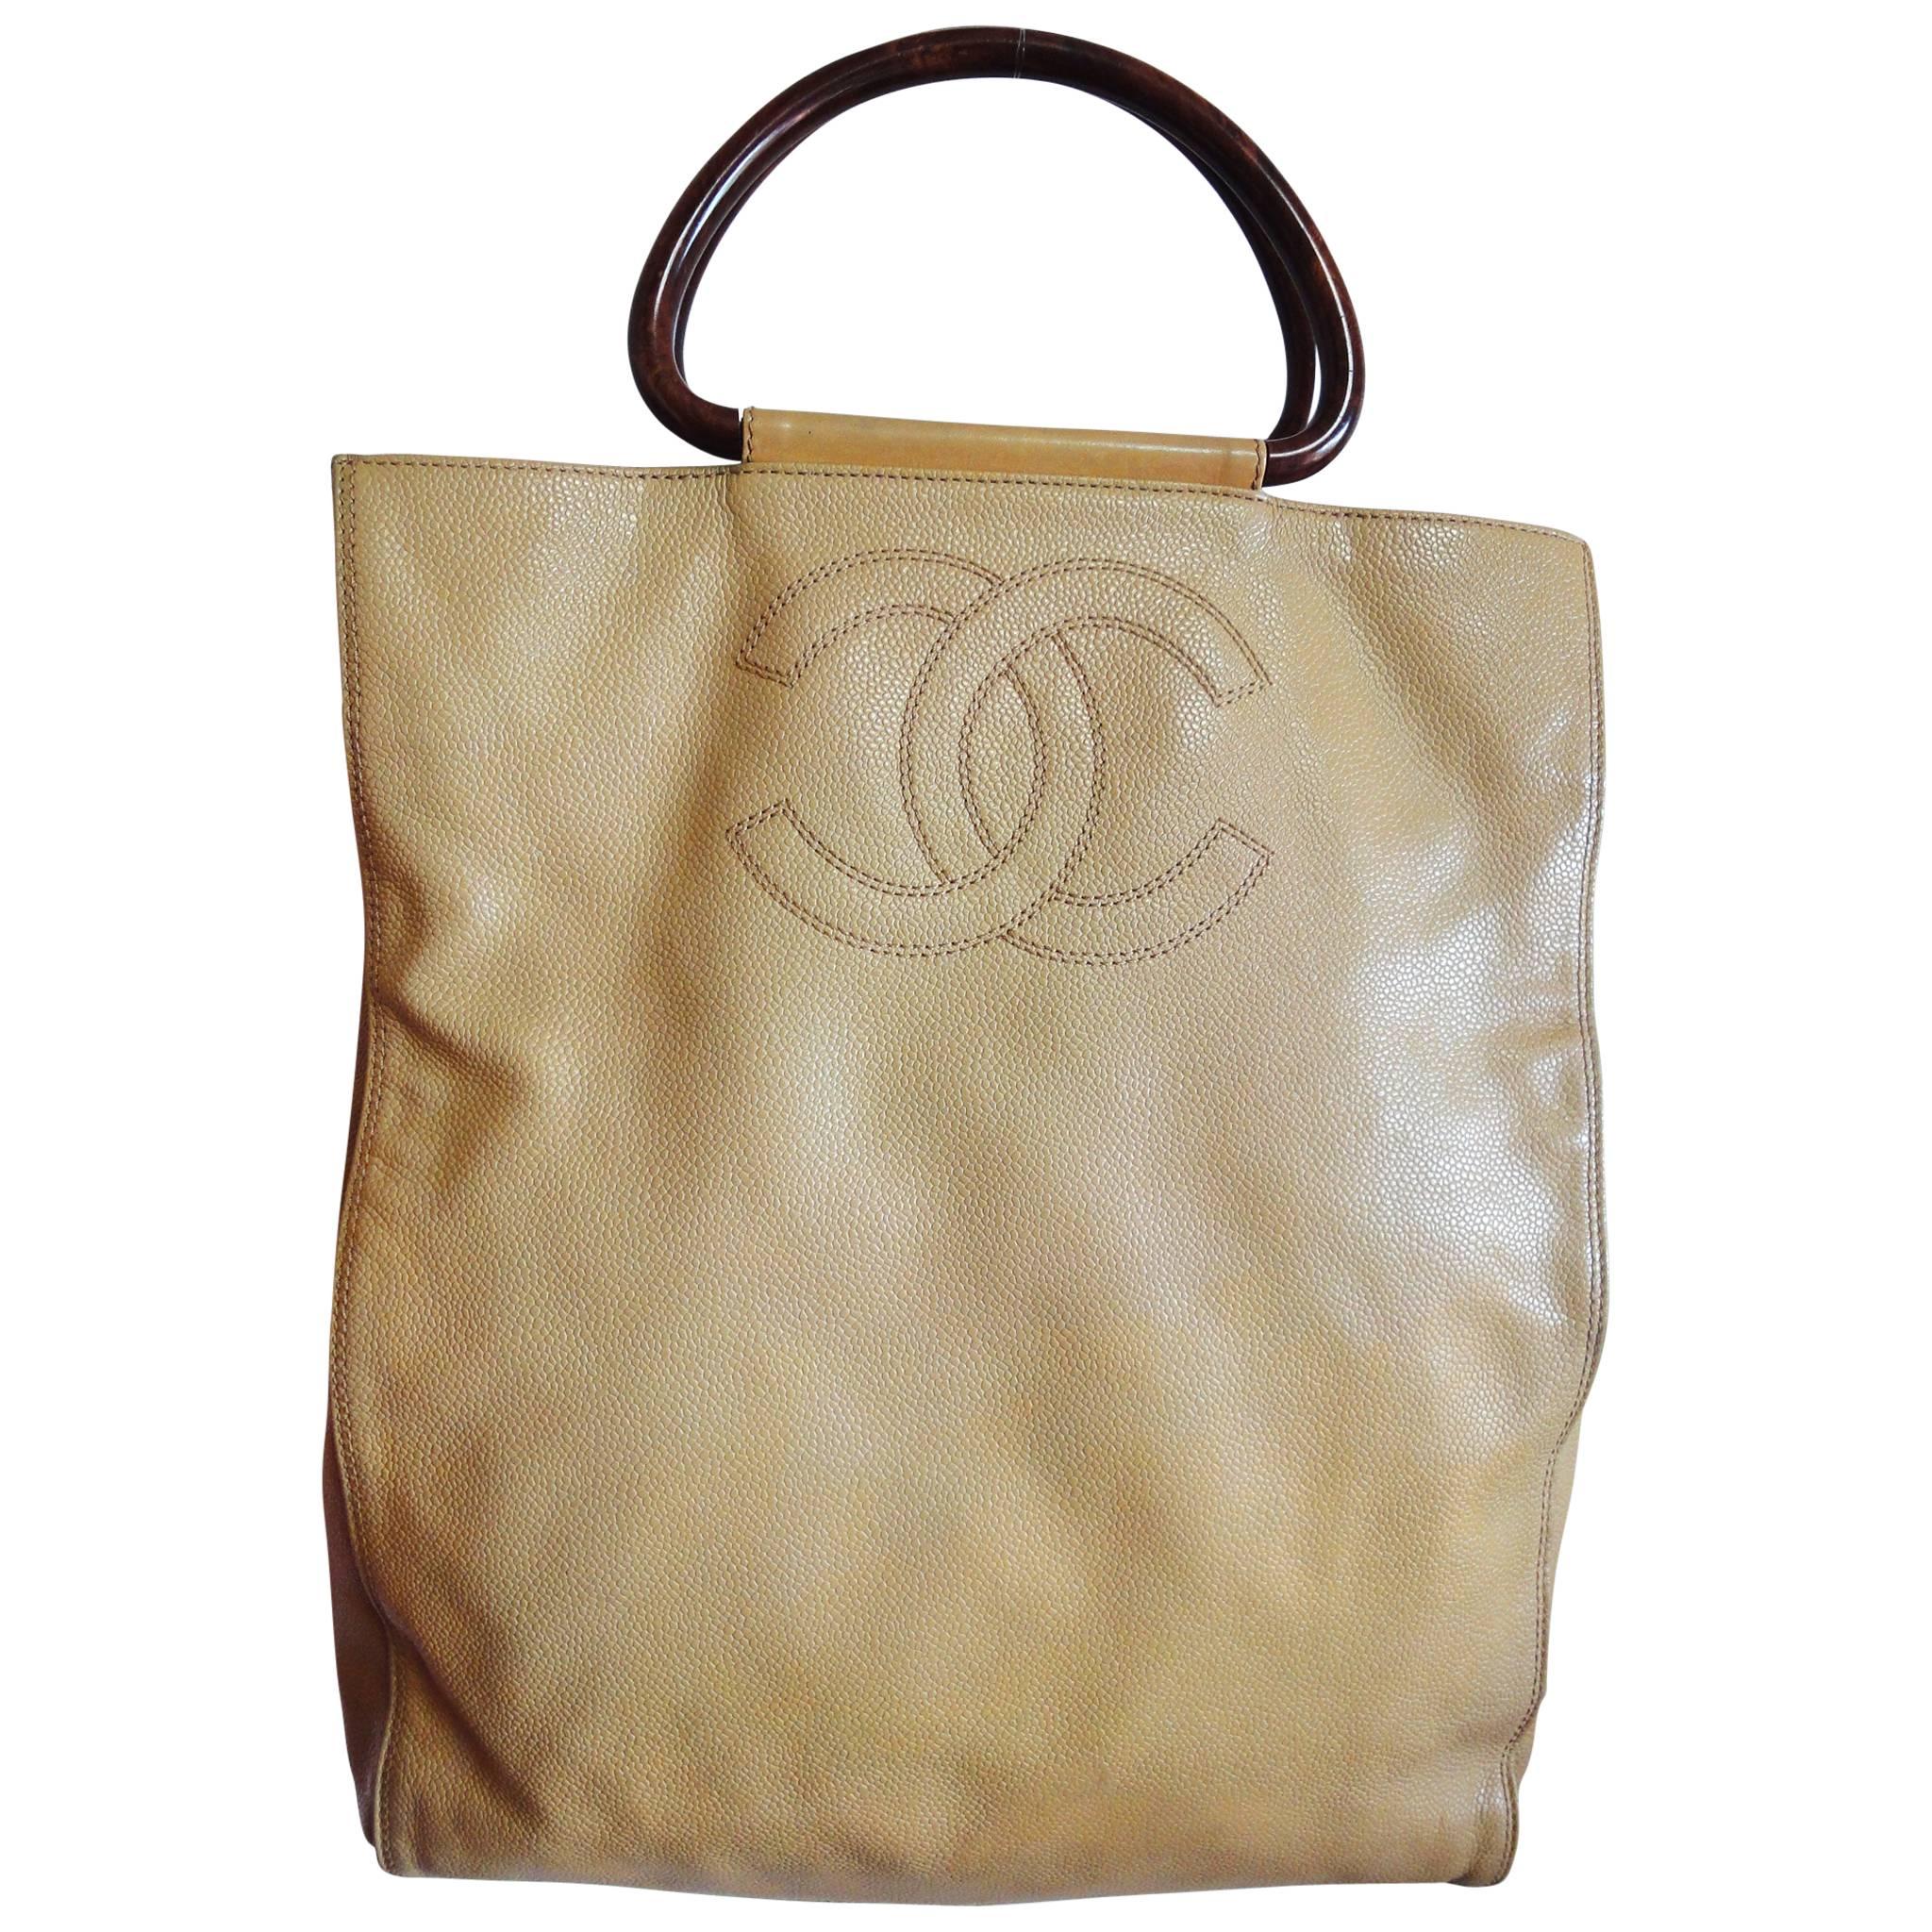 Vintage CHANEL beige caviar large shopper, tote bag with CC stitch mark.